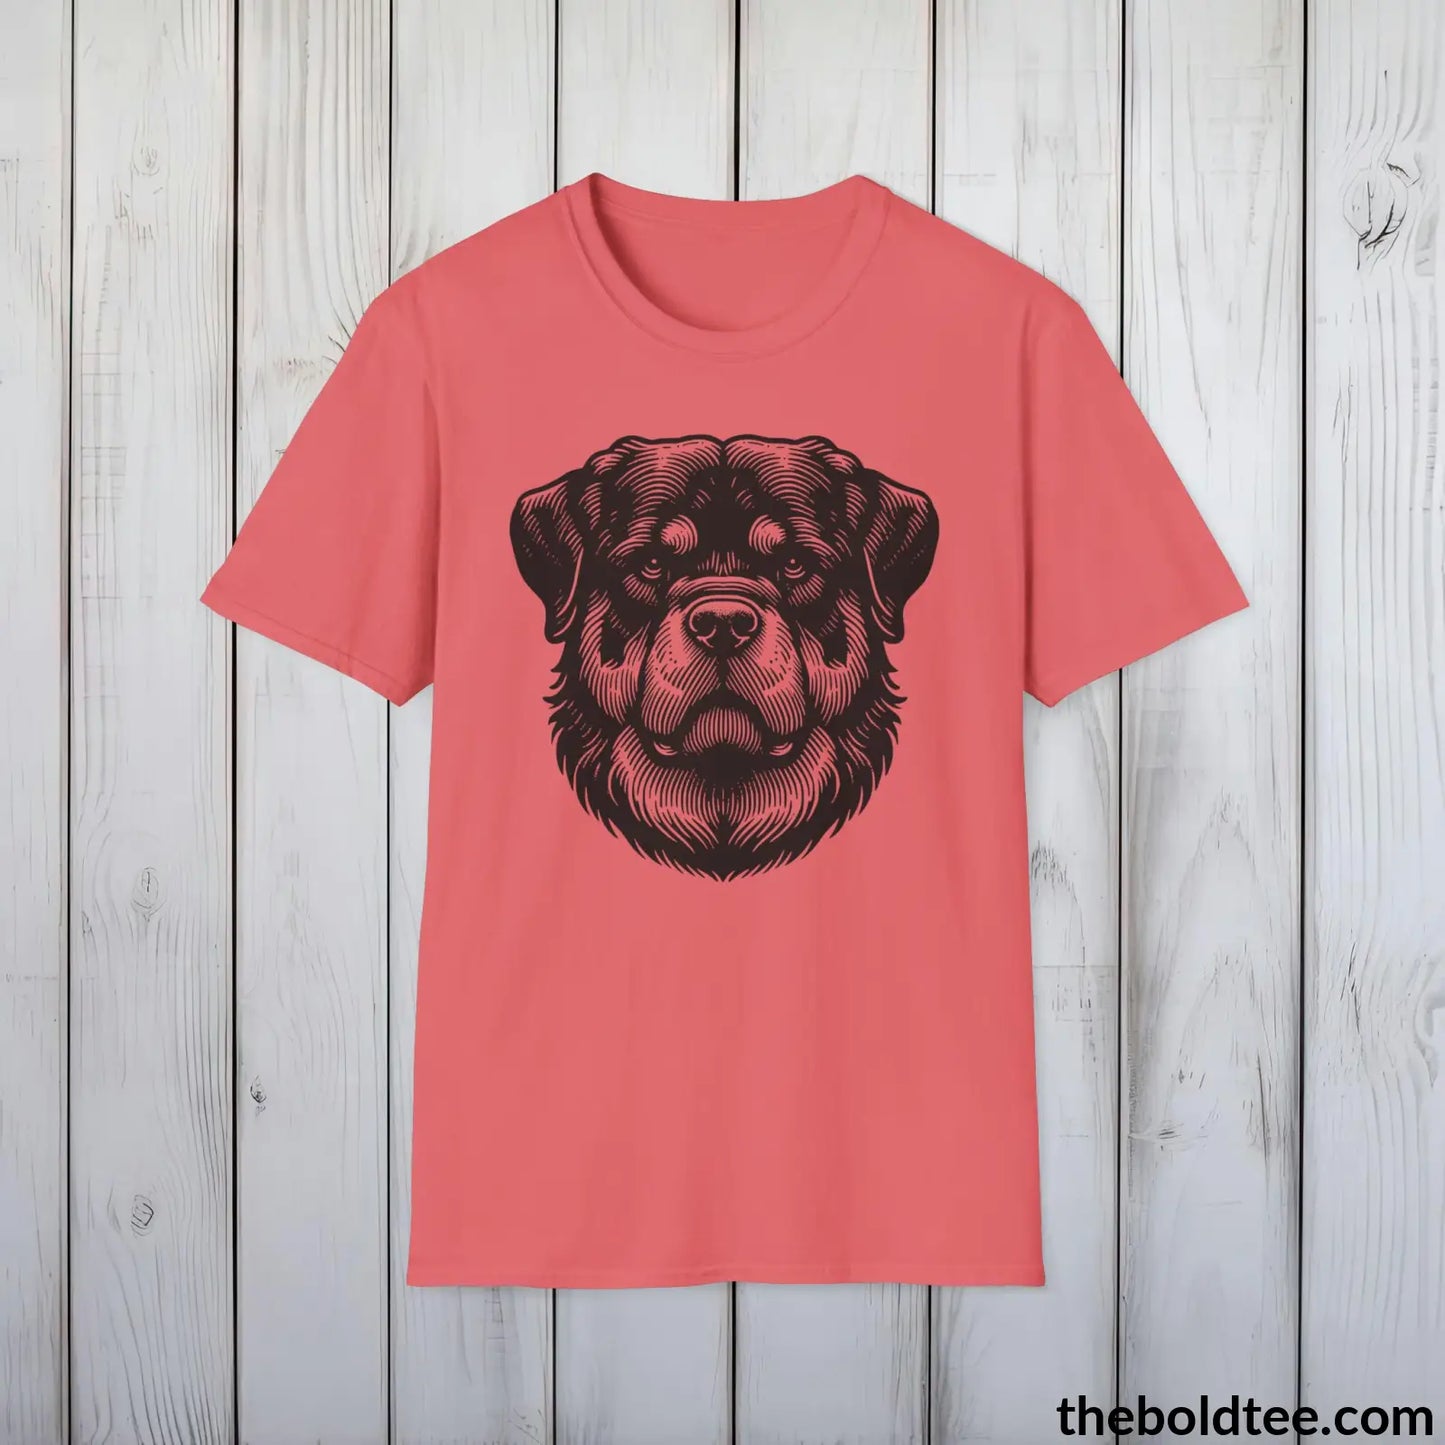 Vintage Rottweiler Dog Tee - Sustainable & Soft Cotton Crewneck Unisex T - Shirt 9 Bold Colors